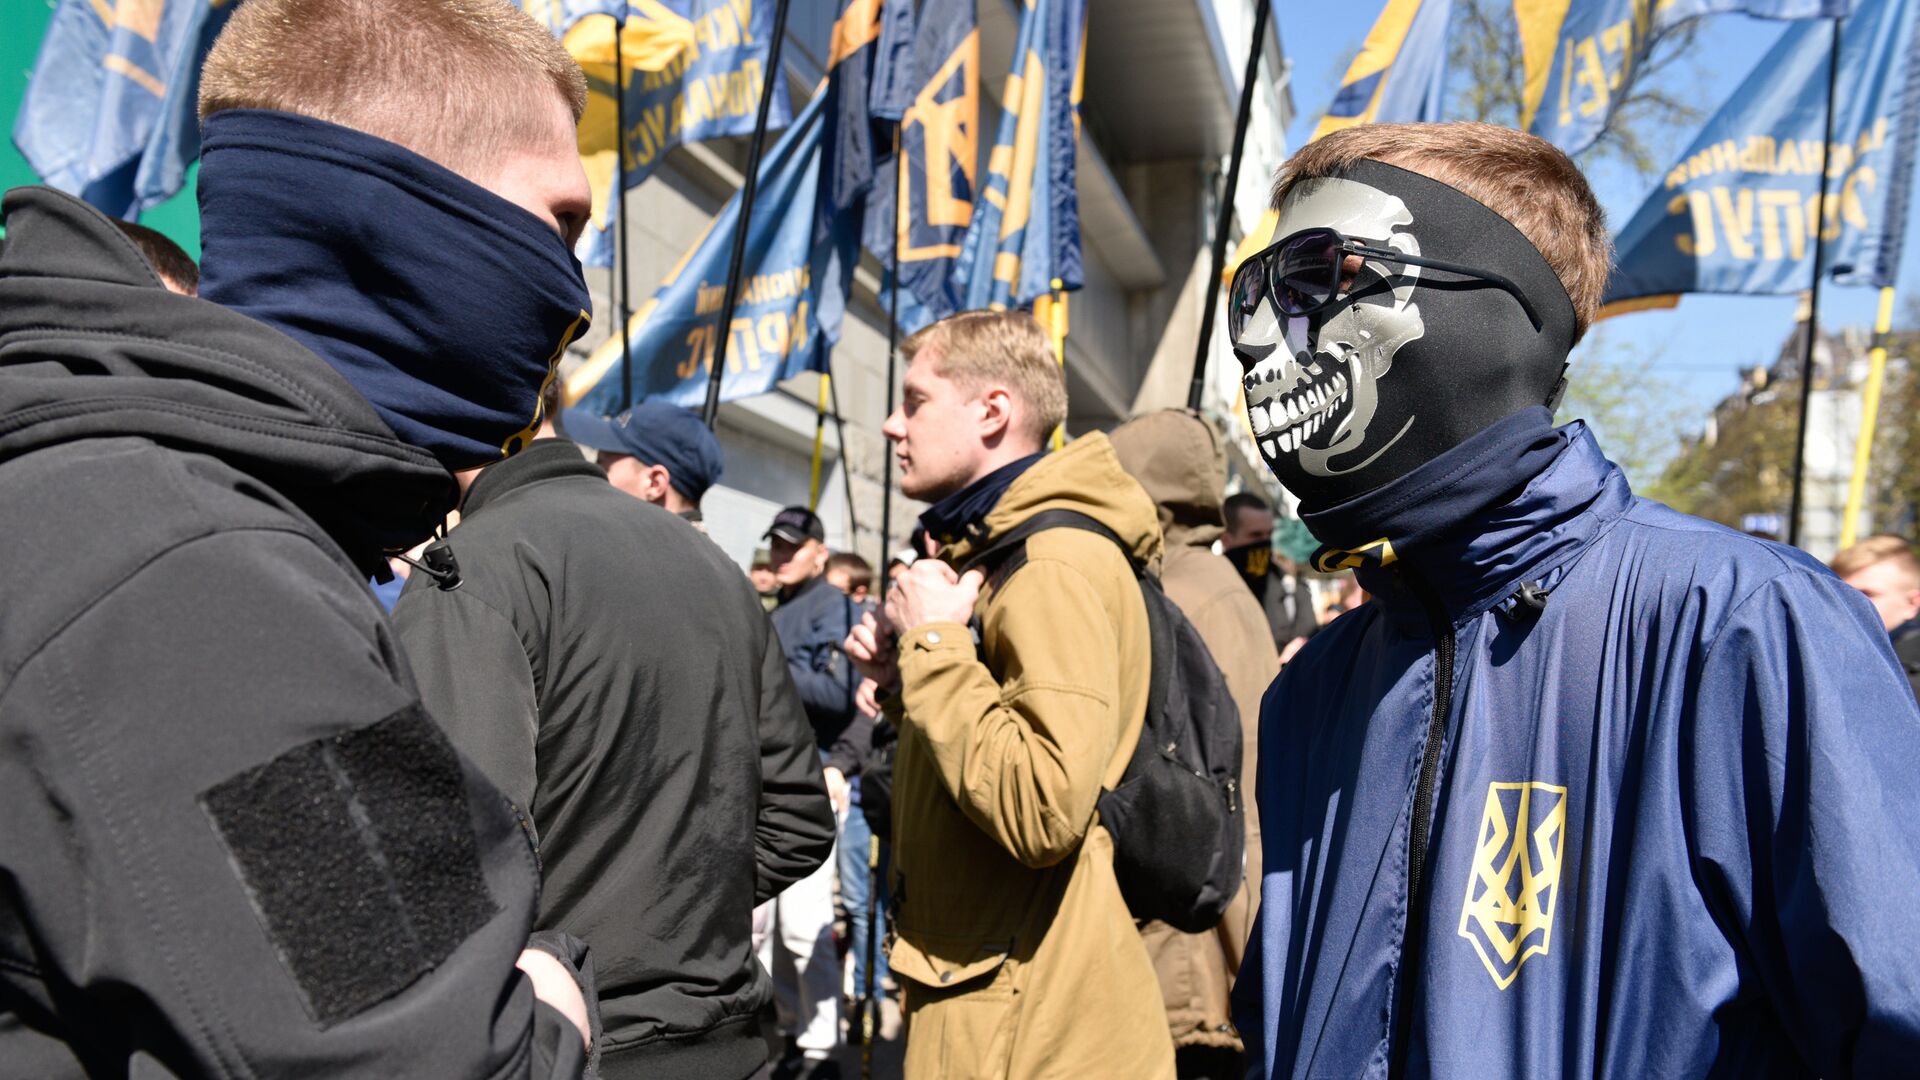 Radicals' (National Corps) protest near a Sberbank branch in Kiev - Sputnik International, 1920, 07.04.2022